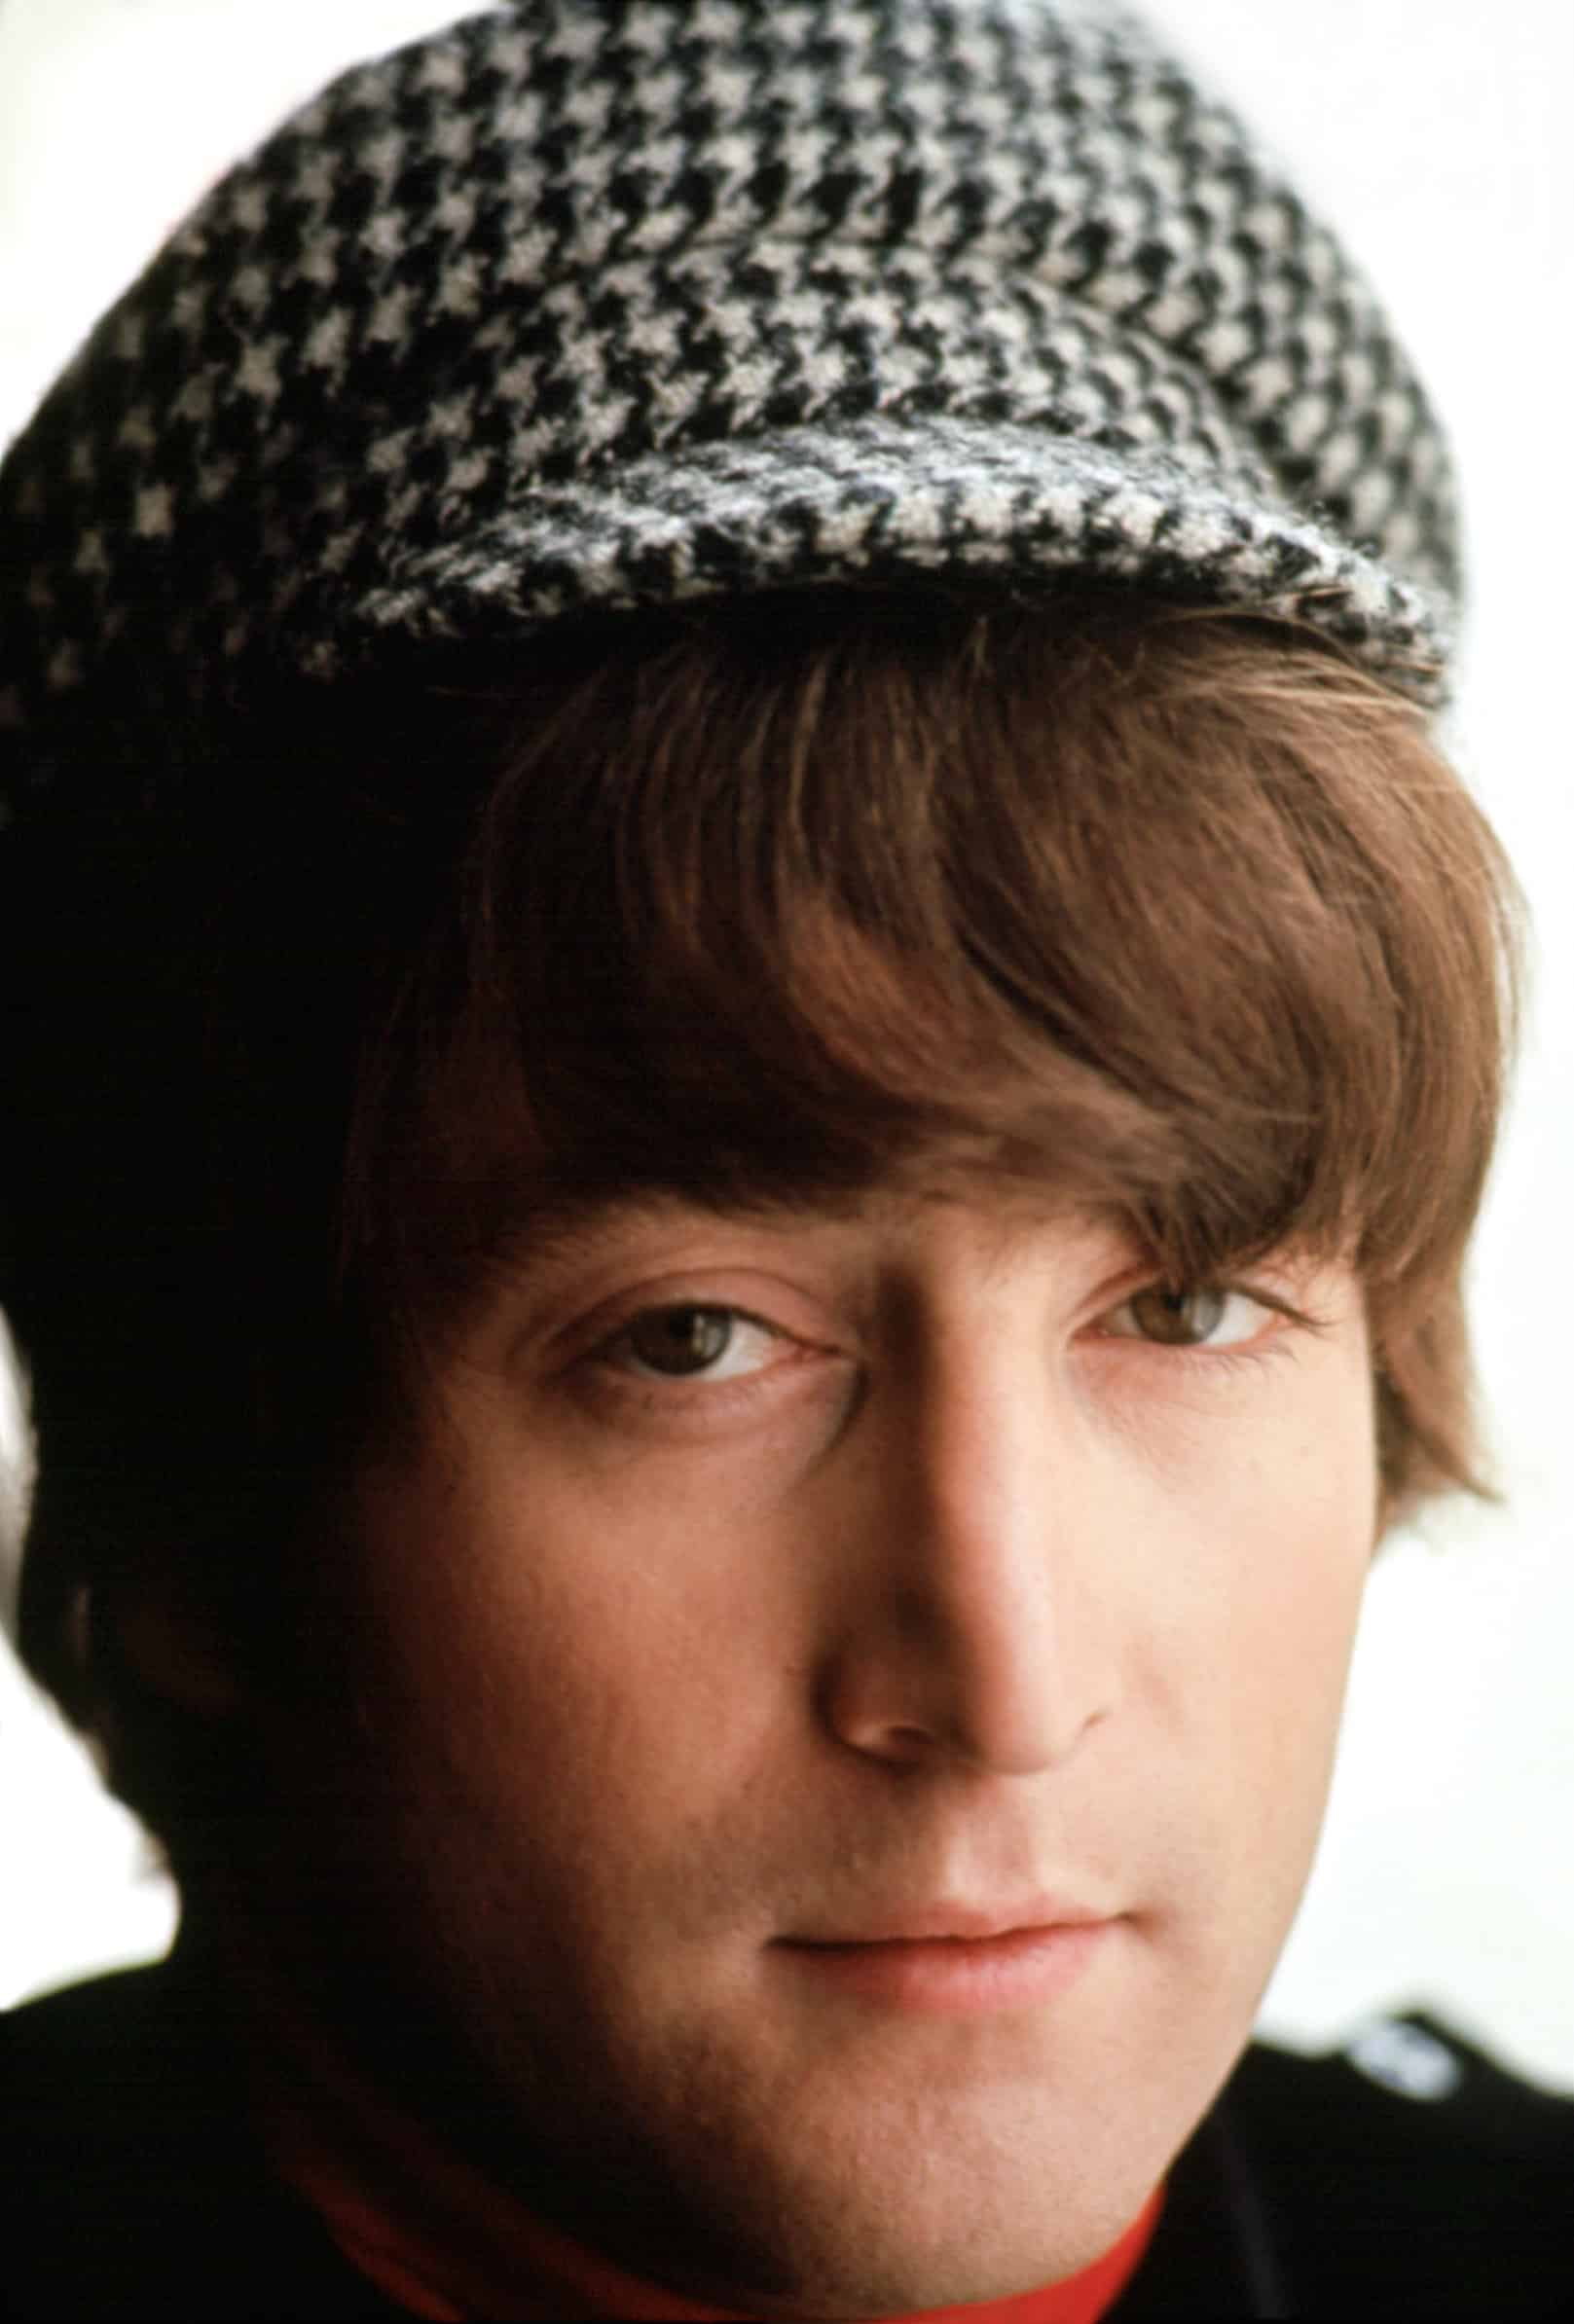 John Lennon, circa mid-1960s